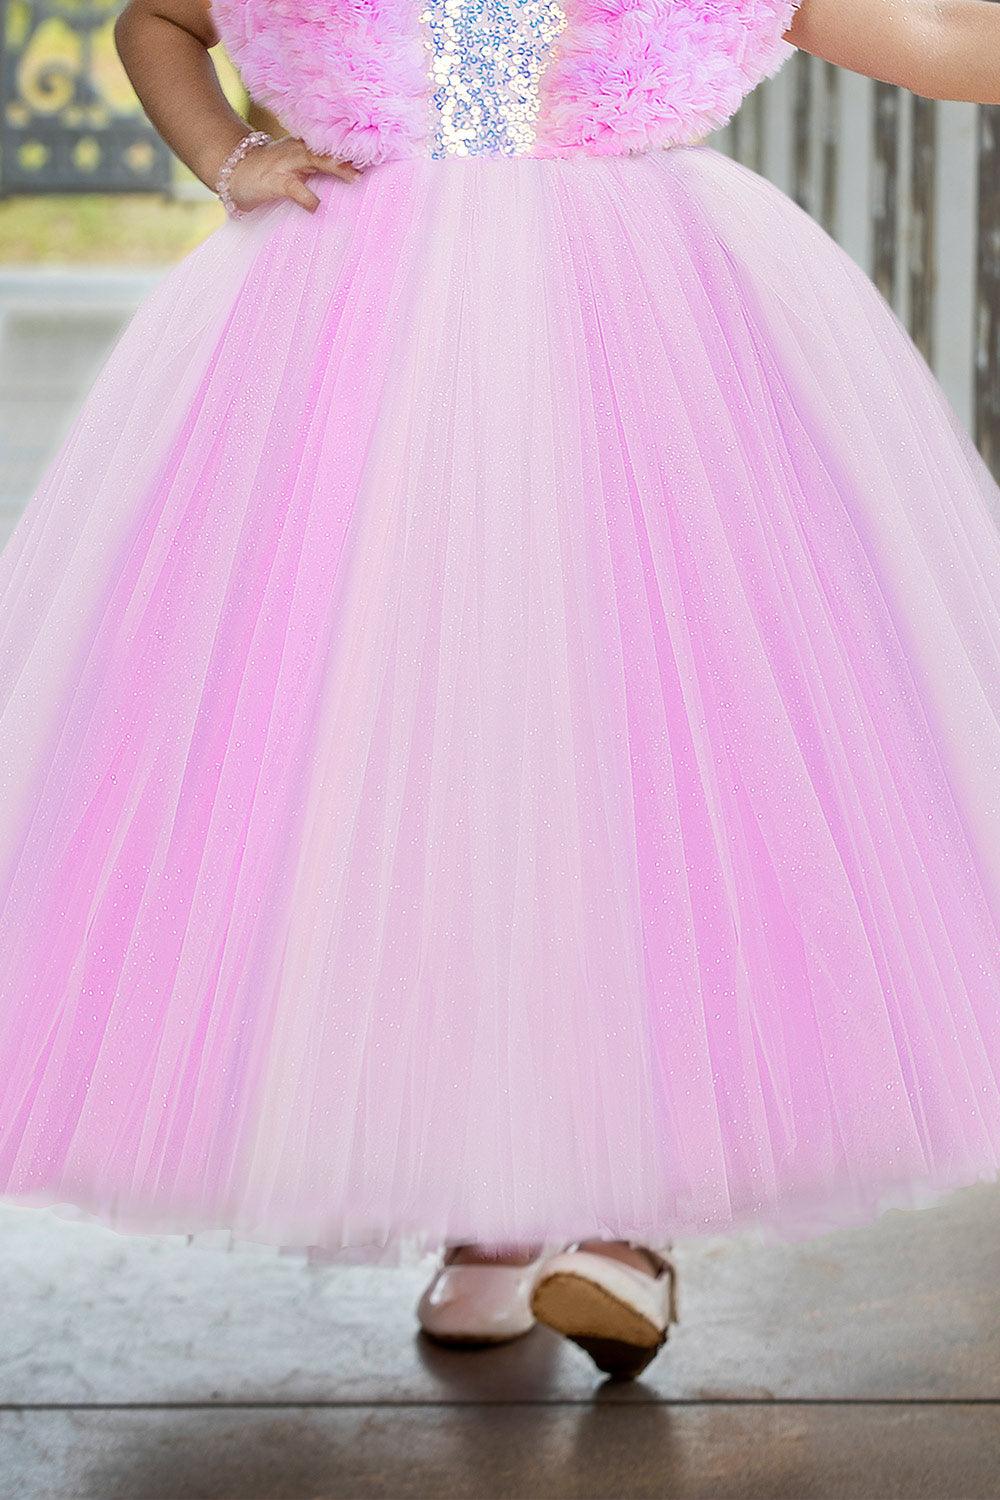 Magical Ball Dress Design Cinderella by MiaHalston on DeviantArt